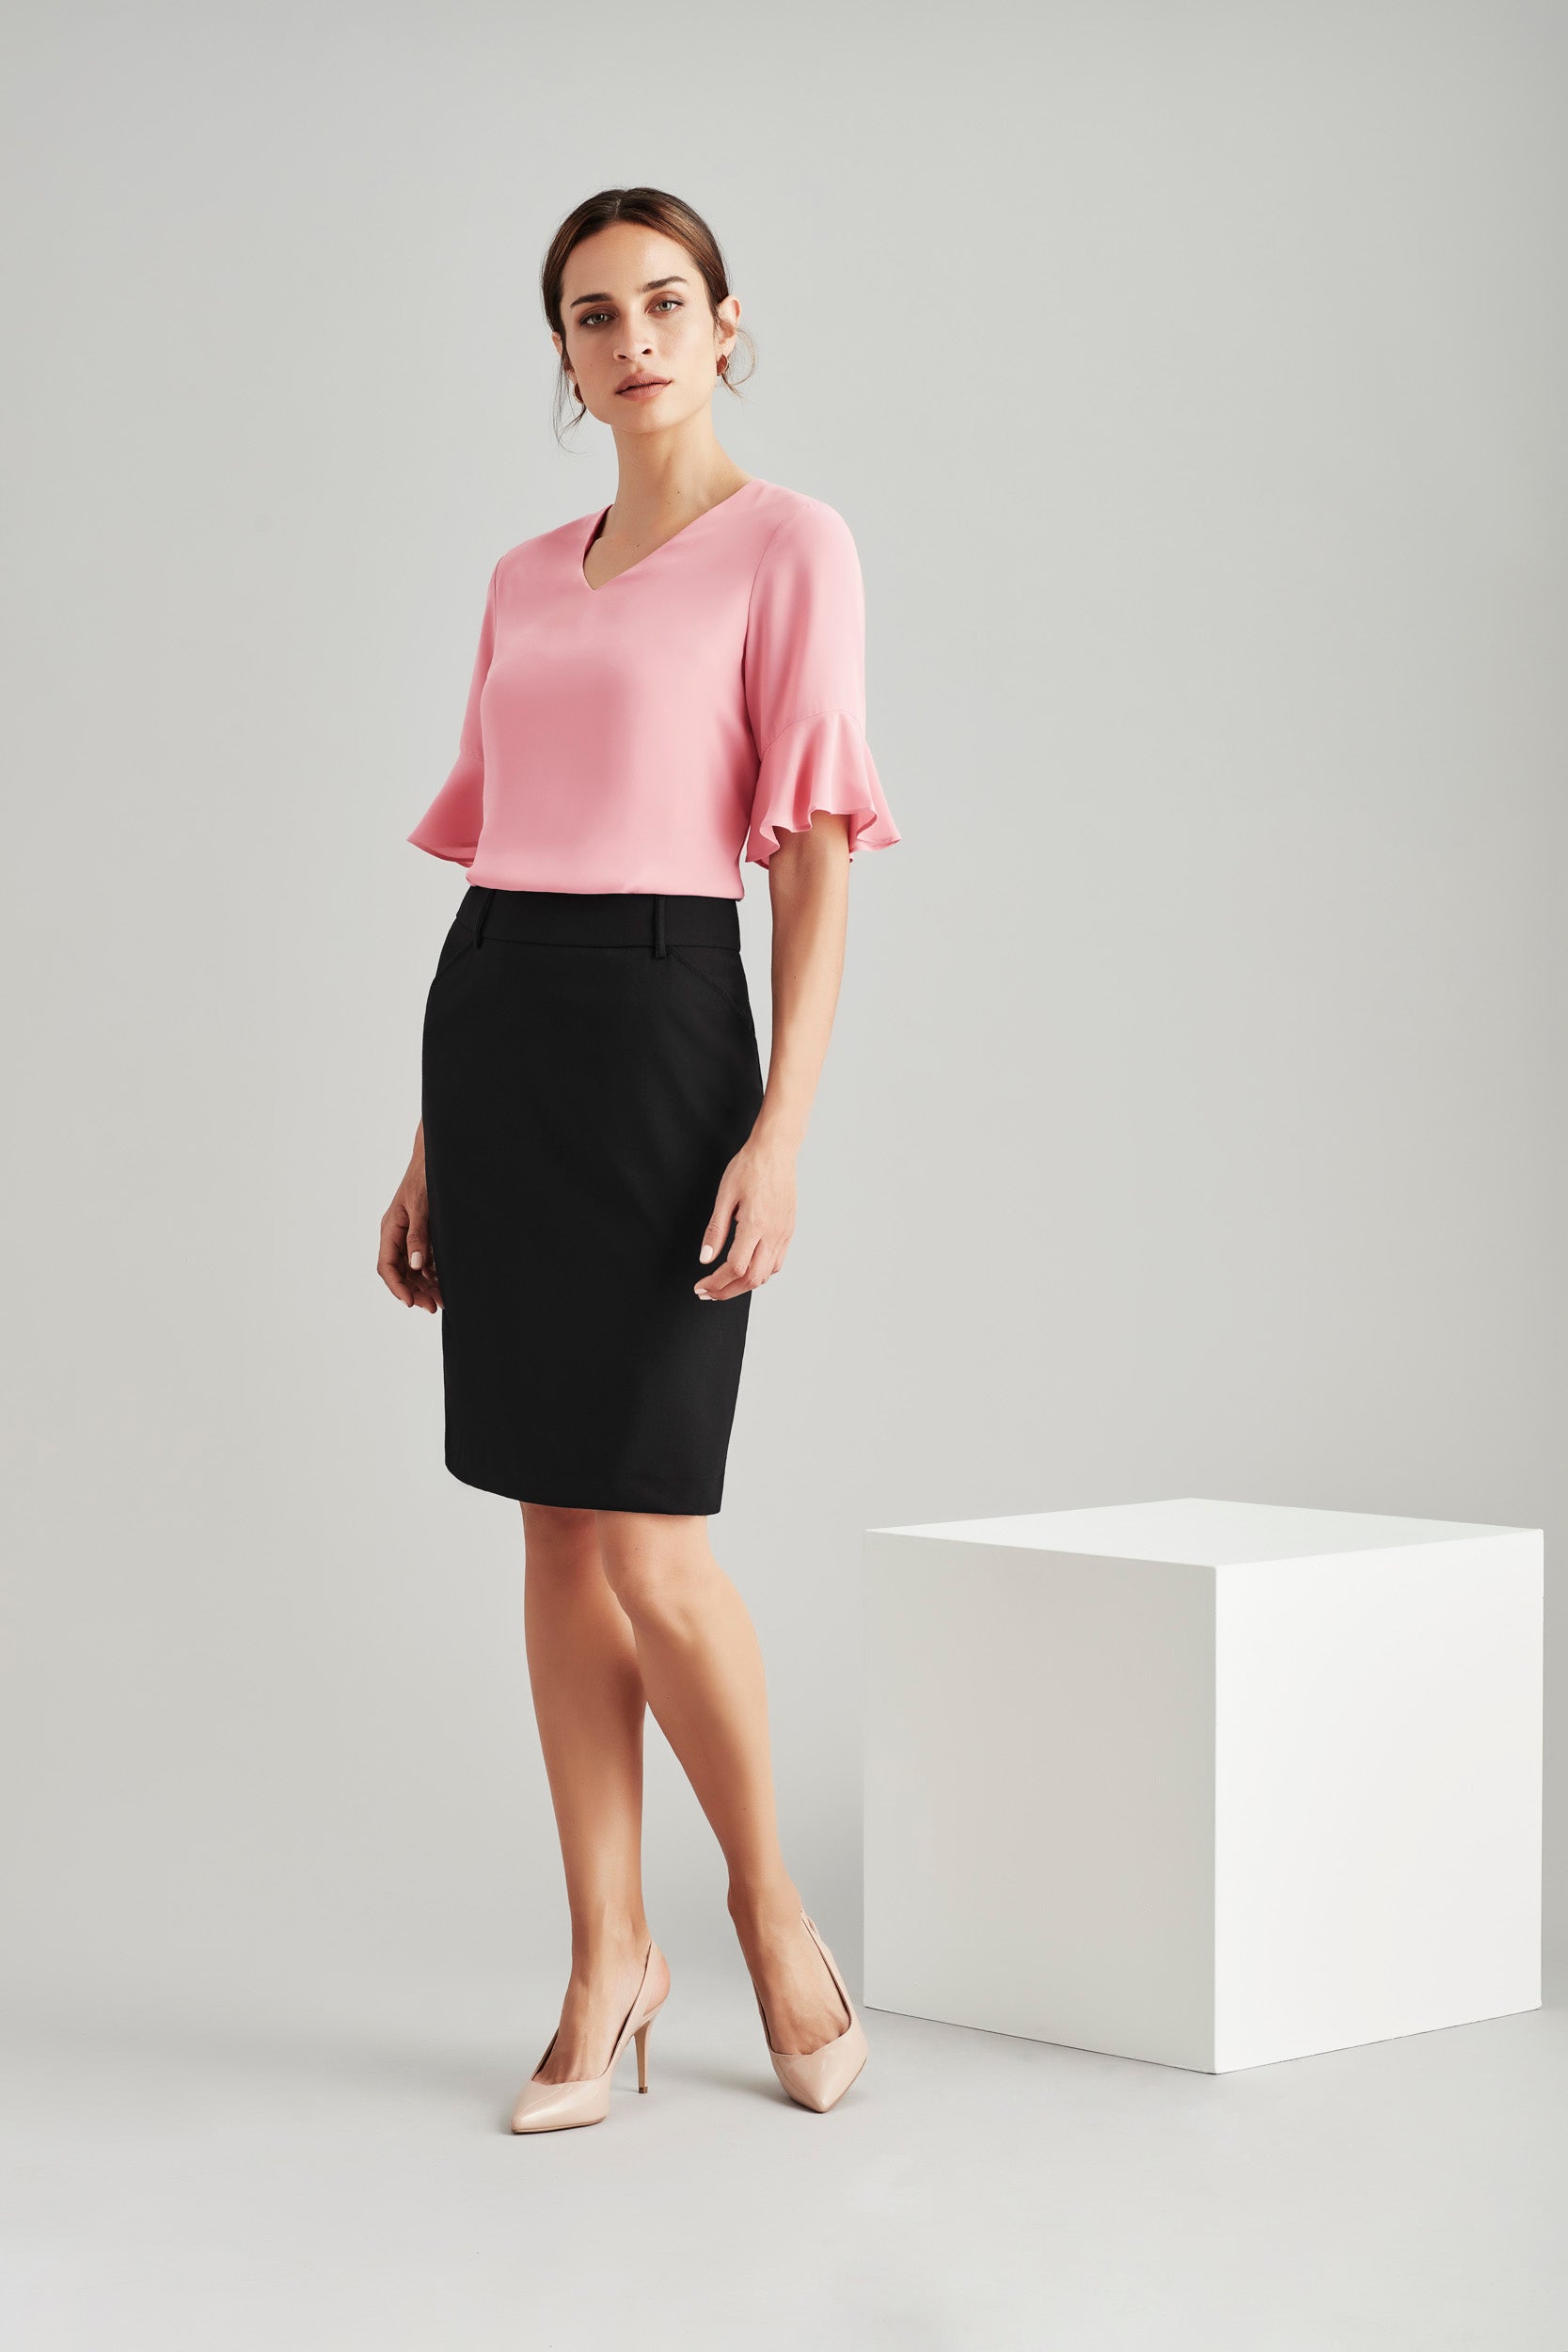 Womens Comfort Wool Stretch Multi-Pleat Skirt